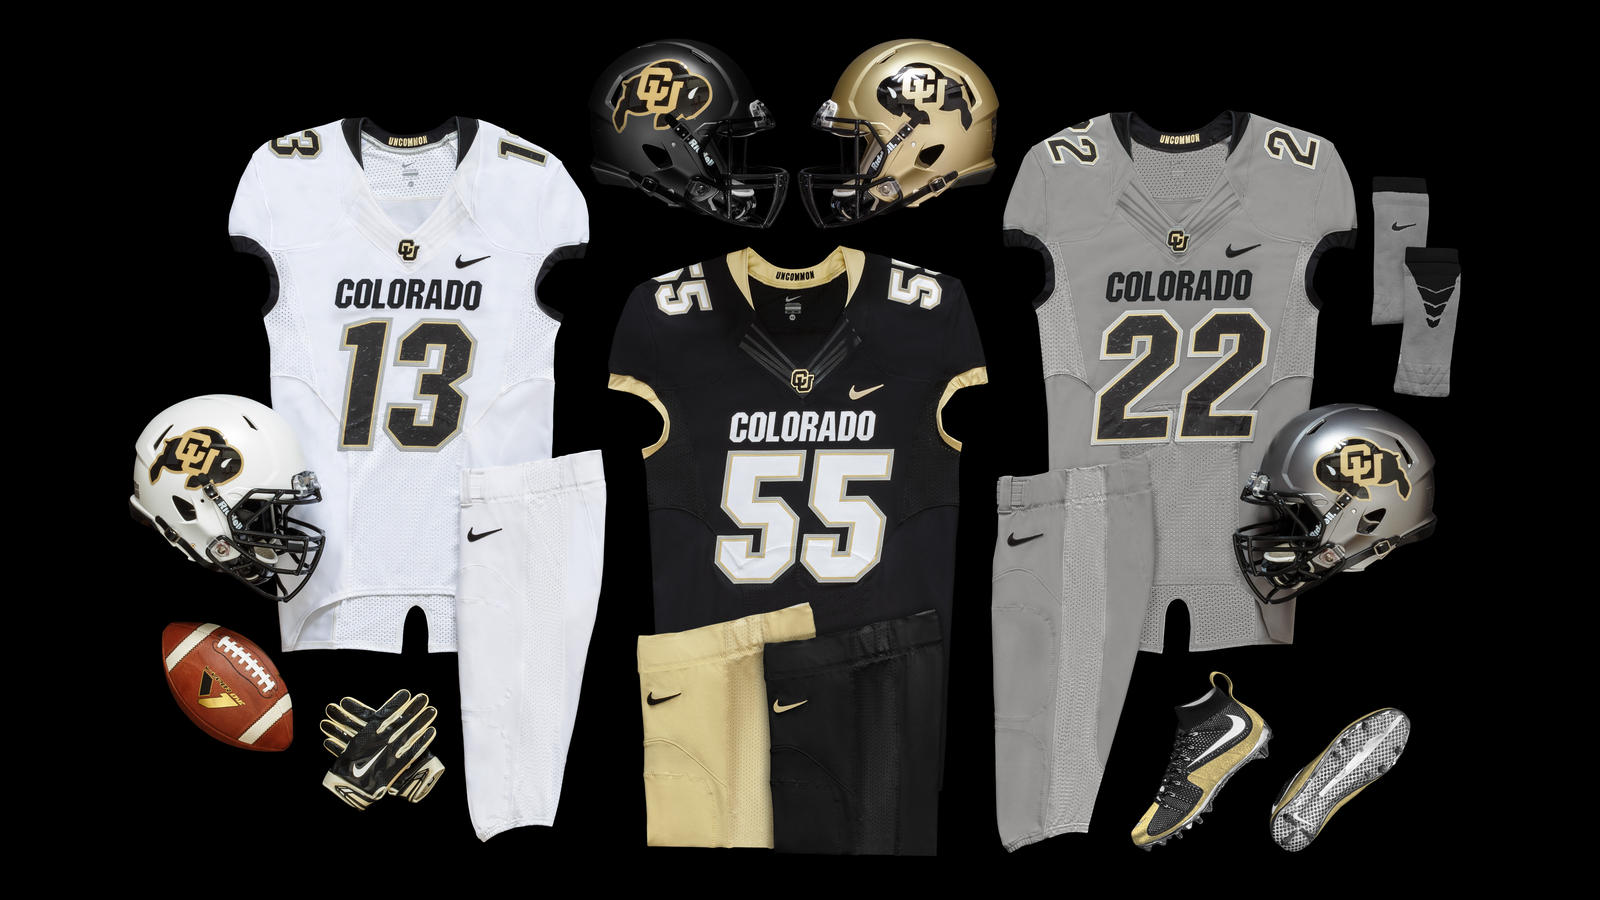 Colorado Buffaloes Honor Mascot with New Nike Football Uniform Design